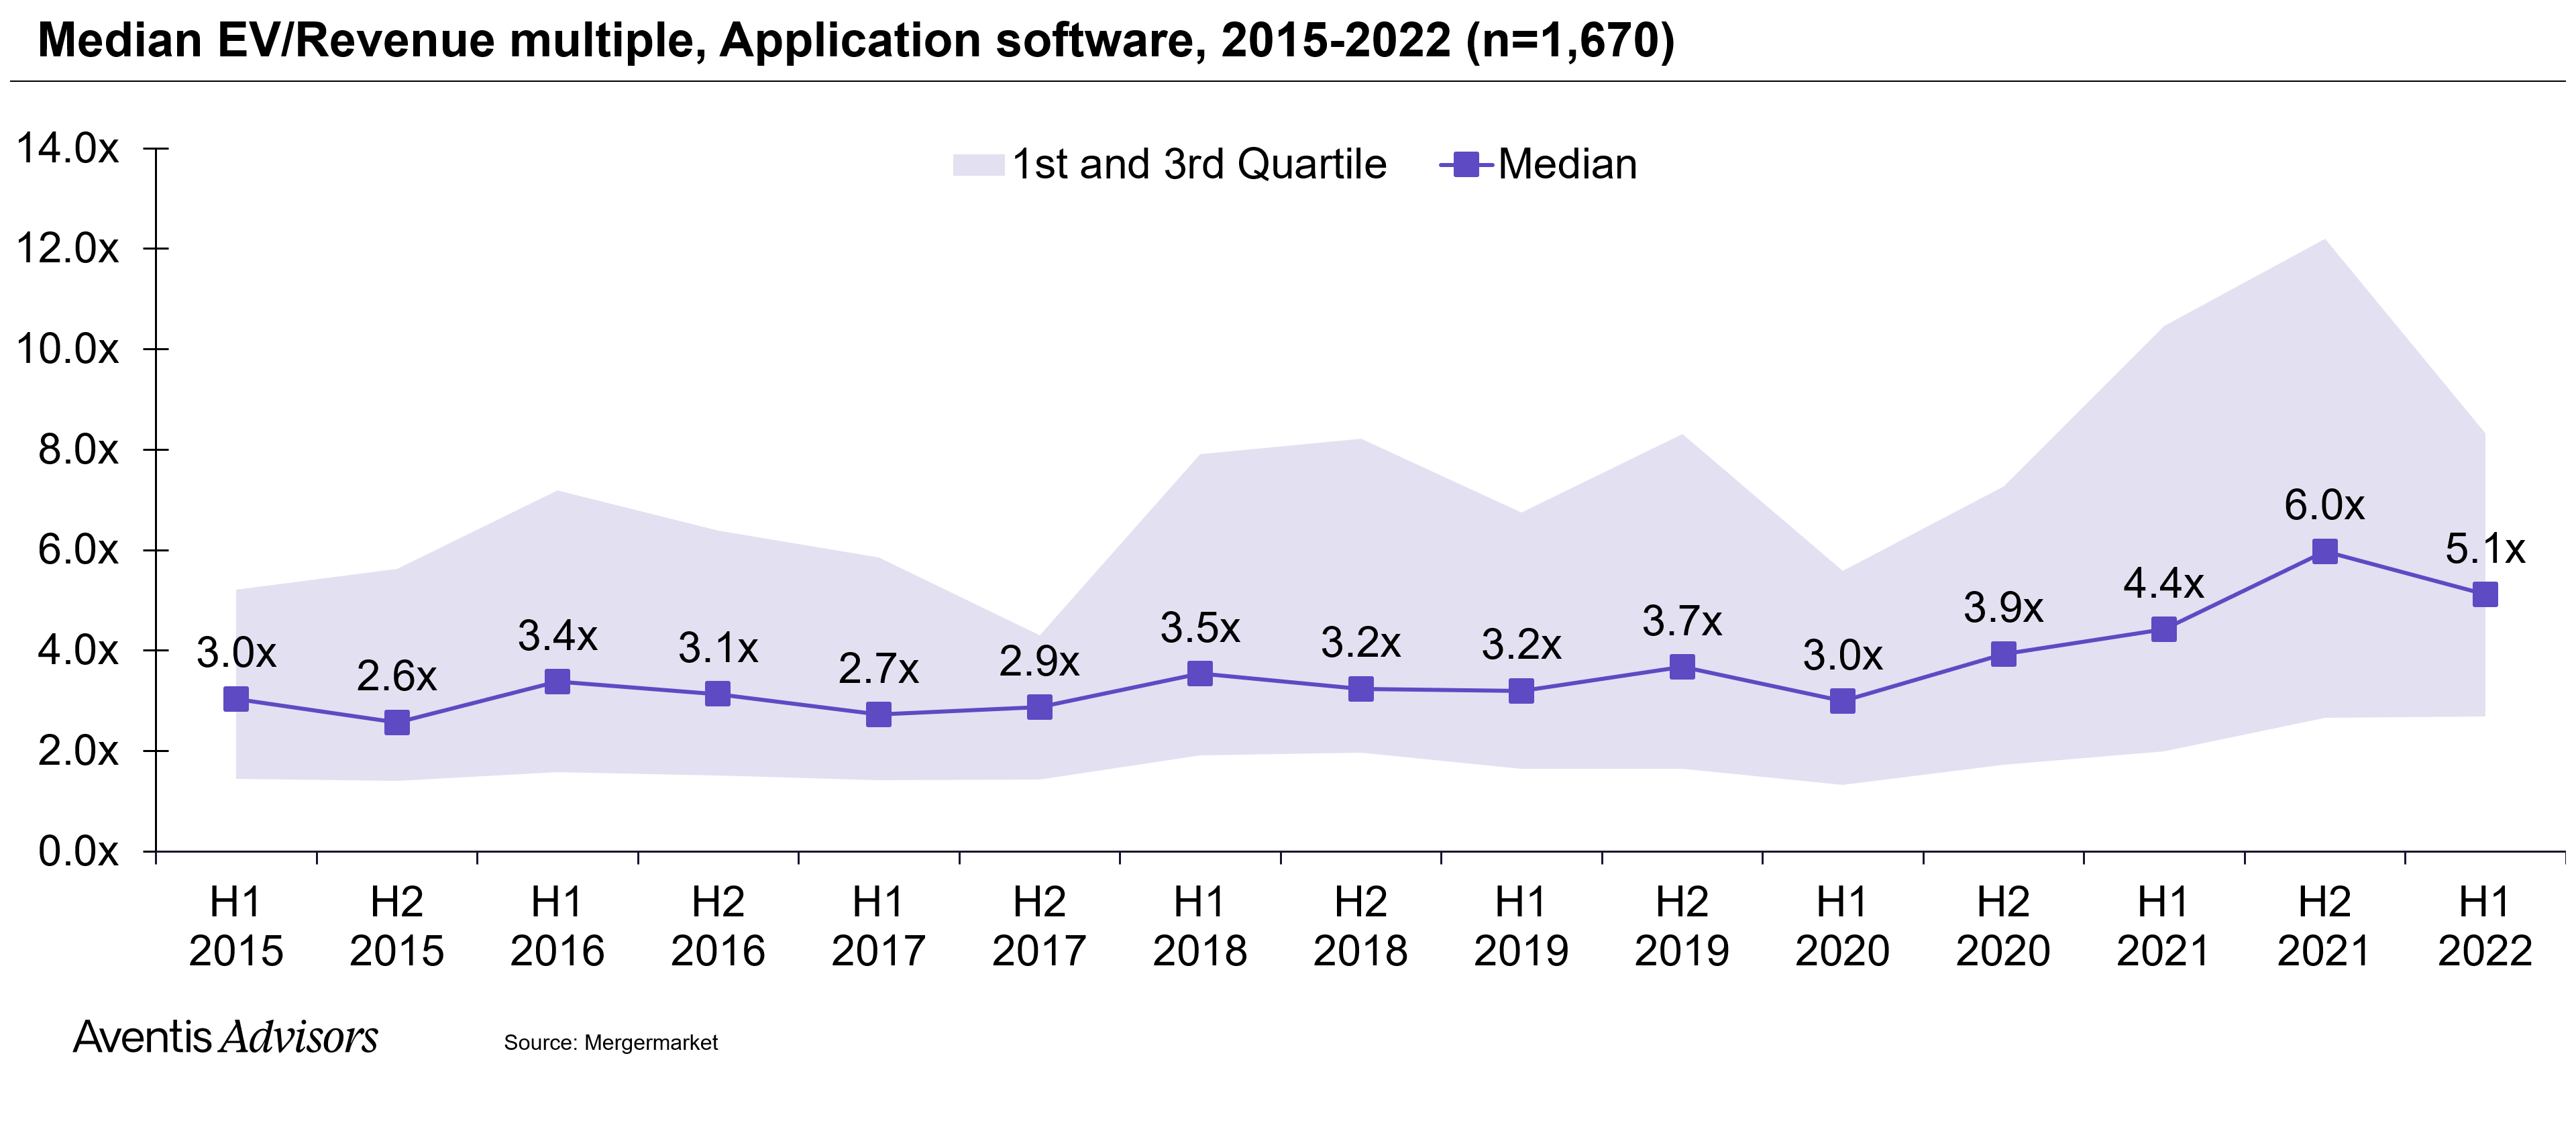 EV/Revenue multiple for software companies in 2015-2022